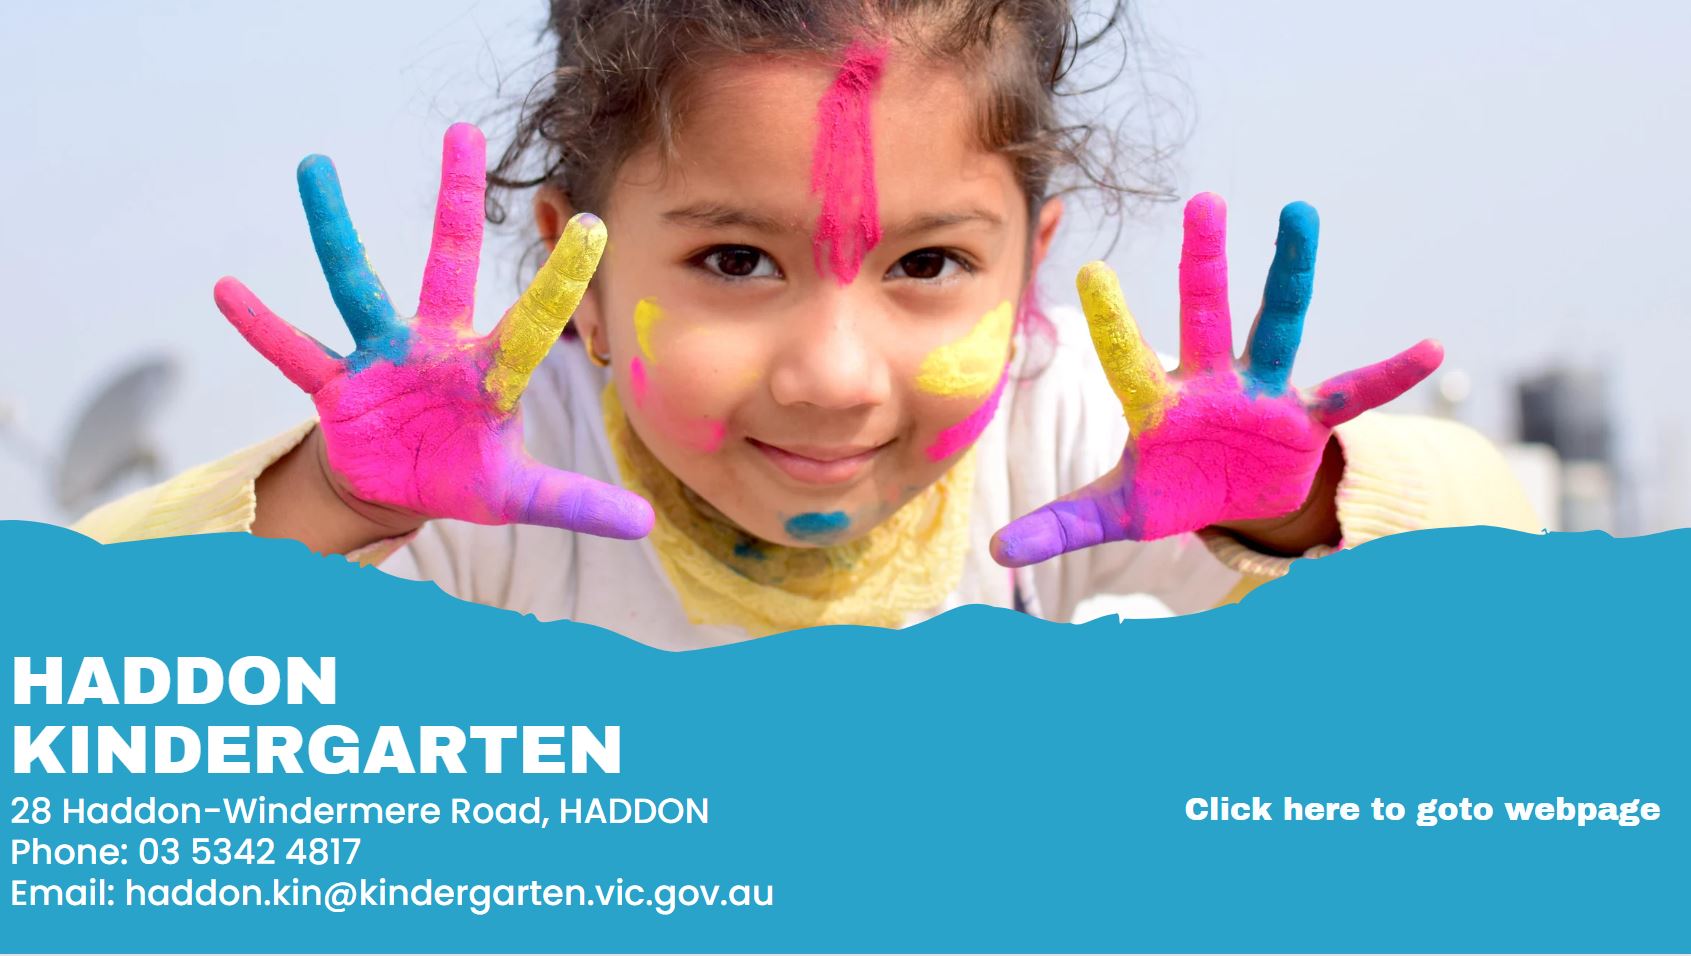 Haddon_Kindergarten